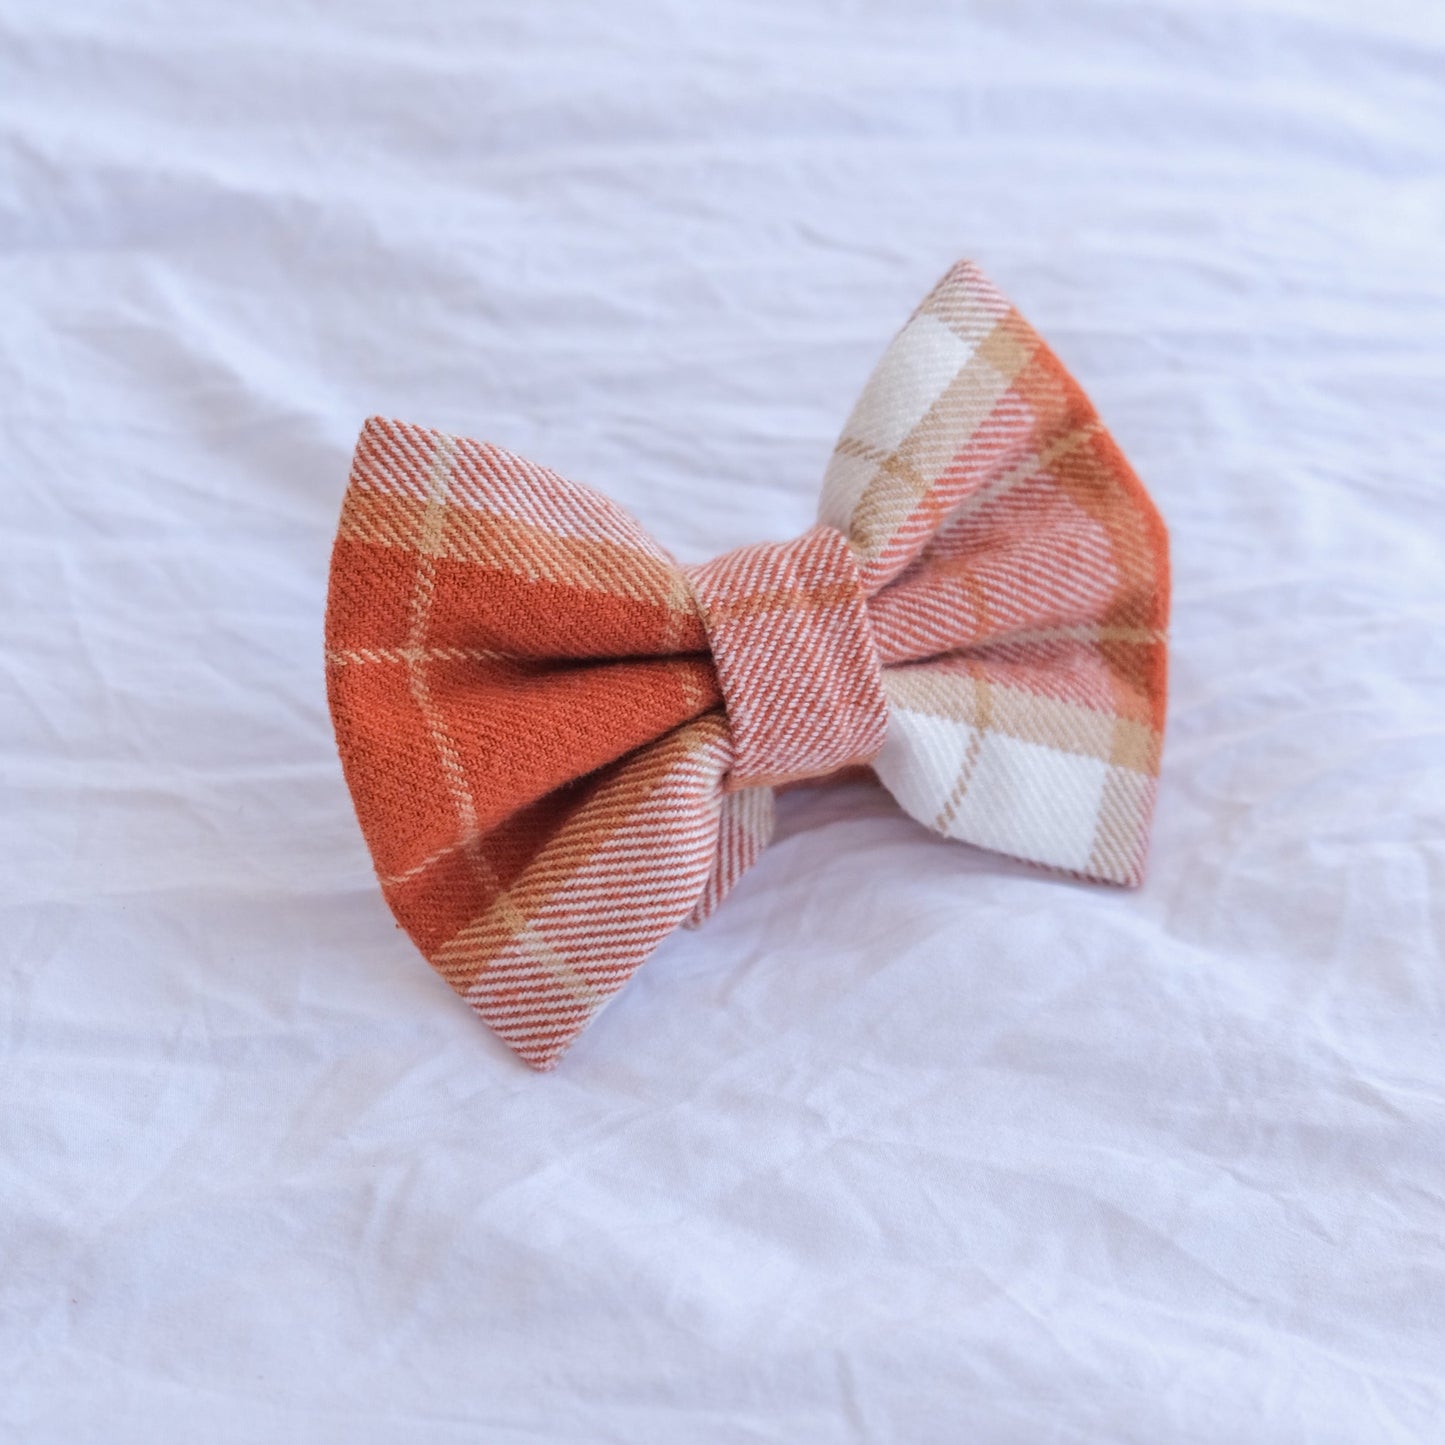 Orange Plaid Bow Tie